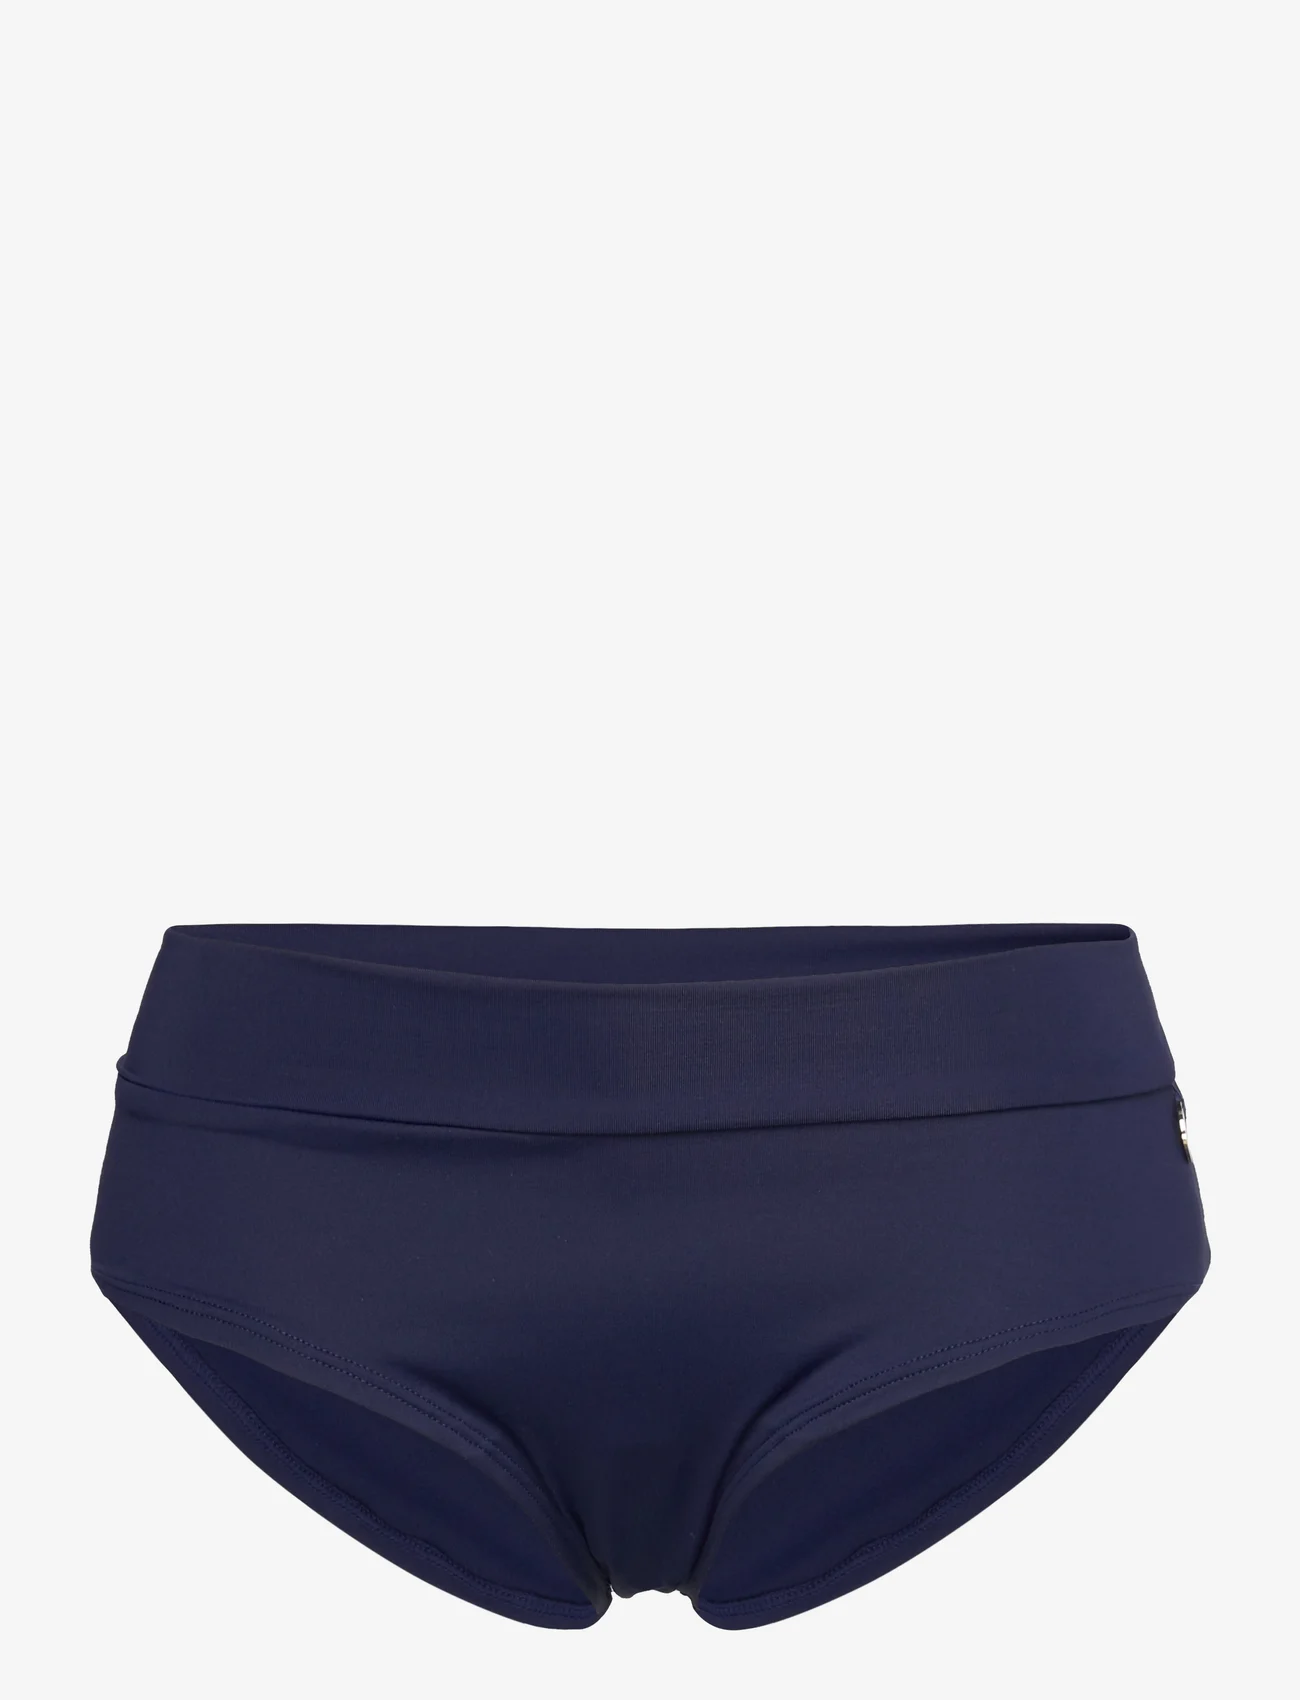 Panos Emporio - Melina Solid Bottom - bikini briefs - navy - 0